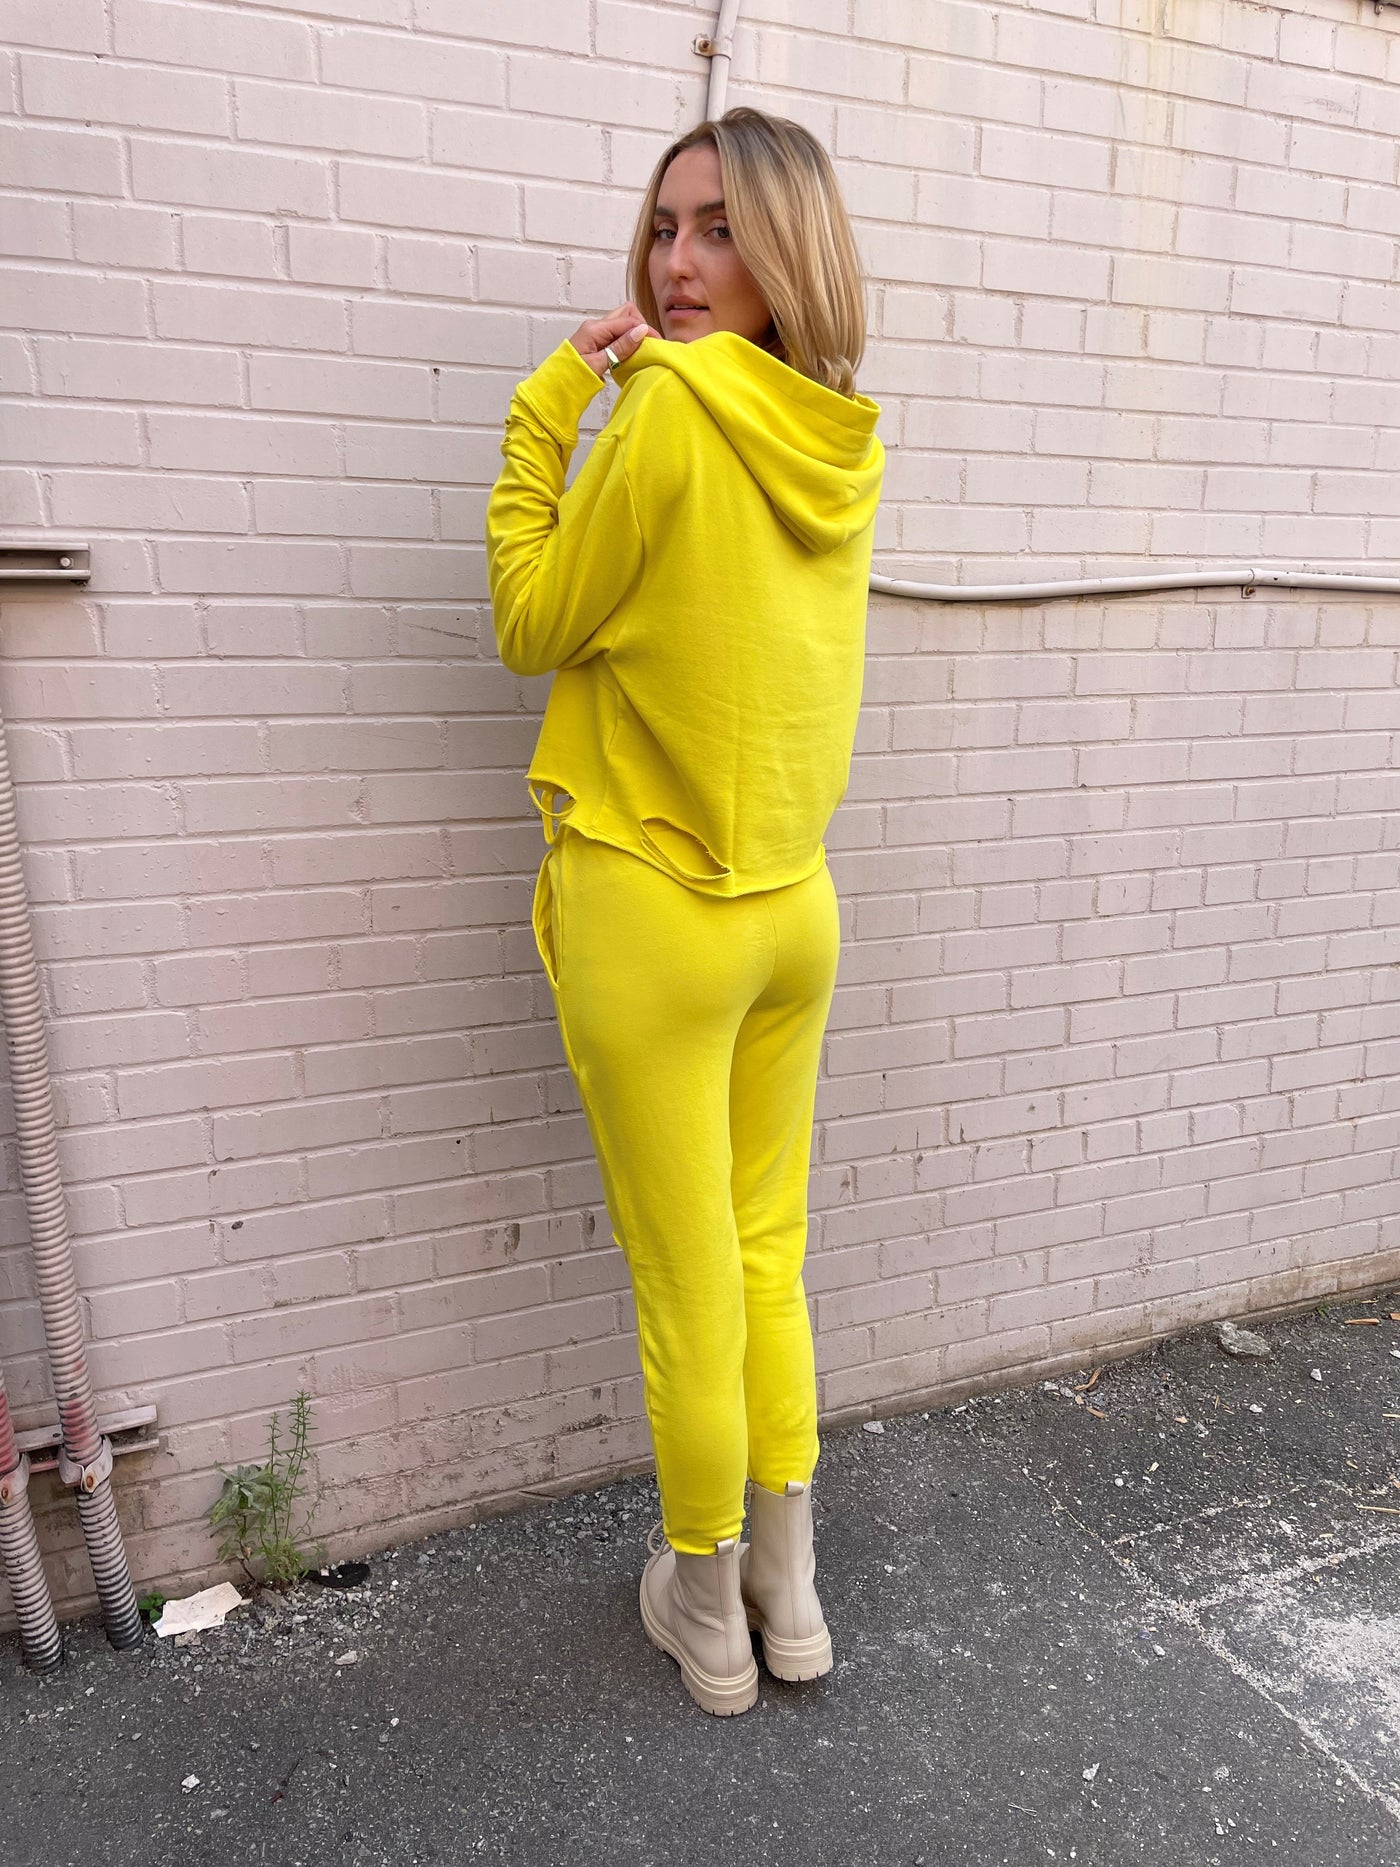 CHRLDR Chloe Bright Yellow Cutout Hoodie